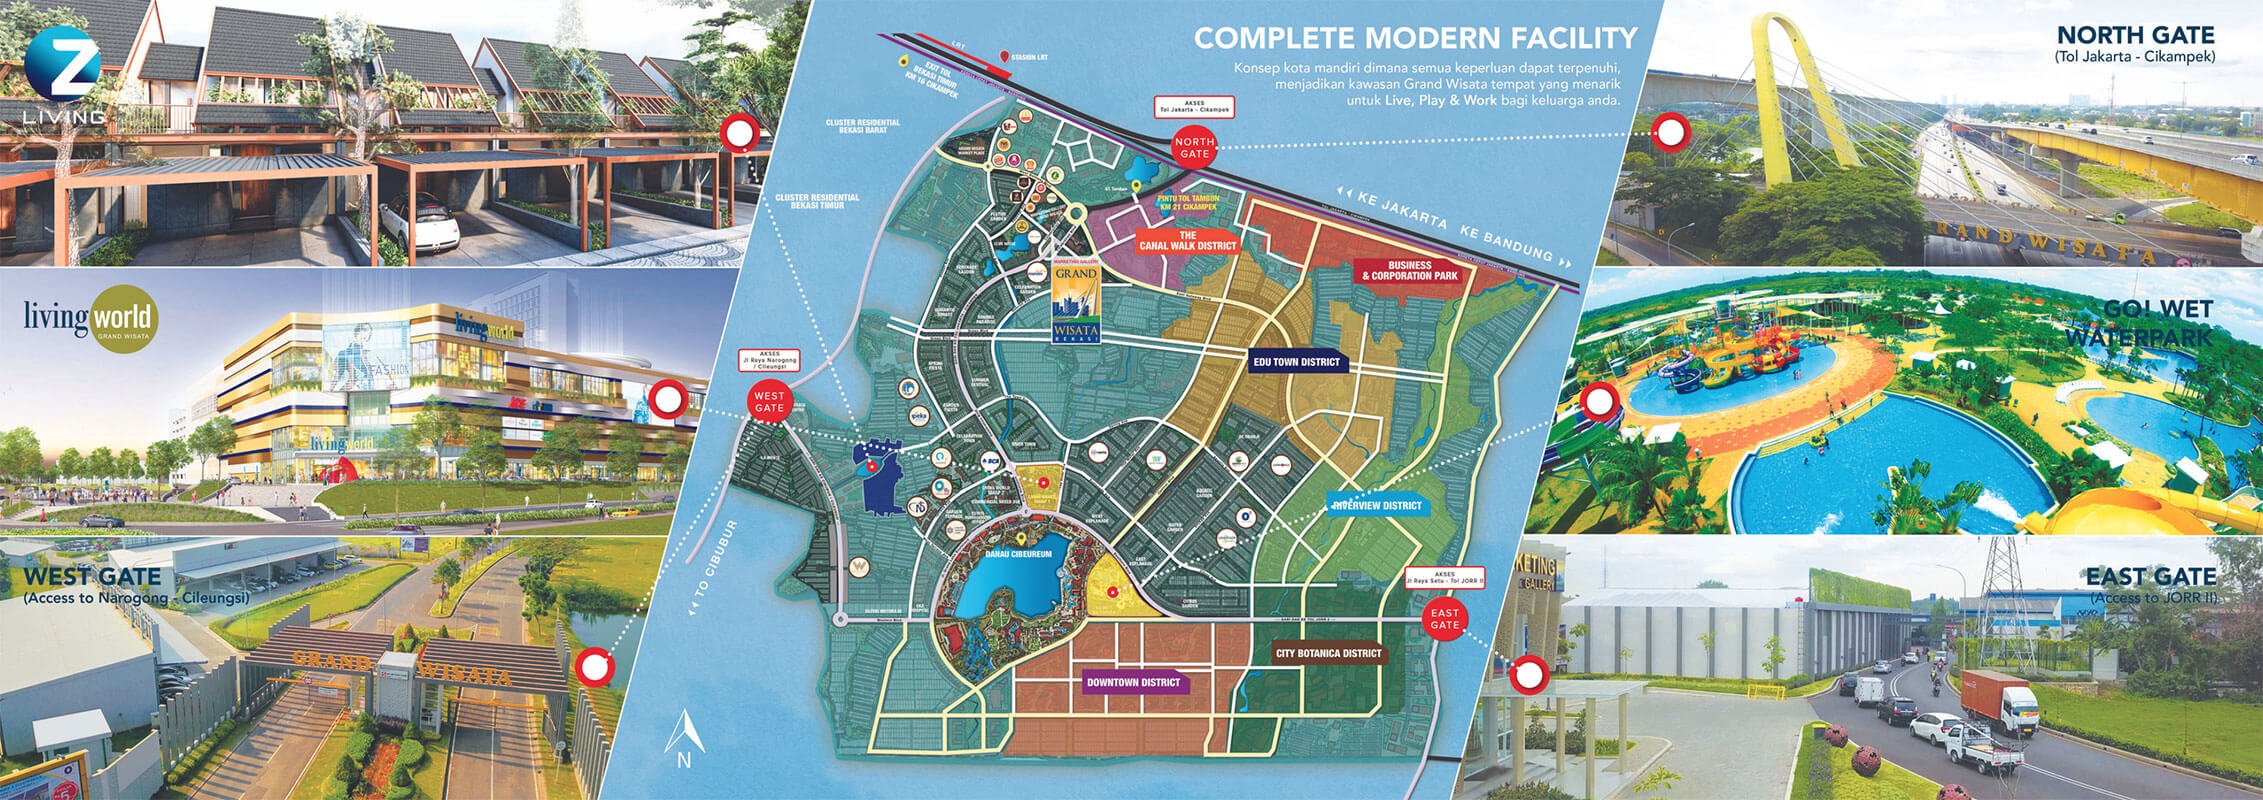 Grand Wisata Bekasi Complete Modern Facilities